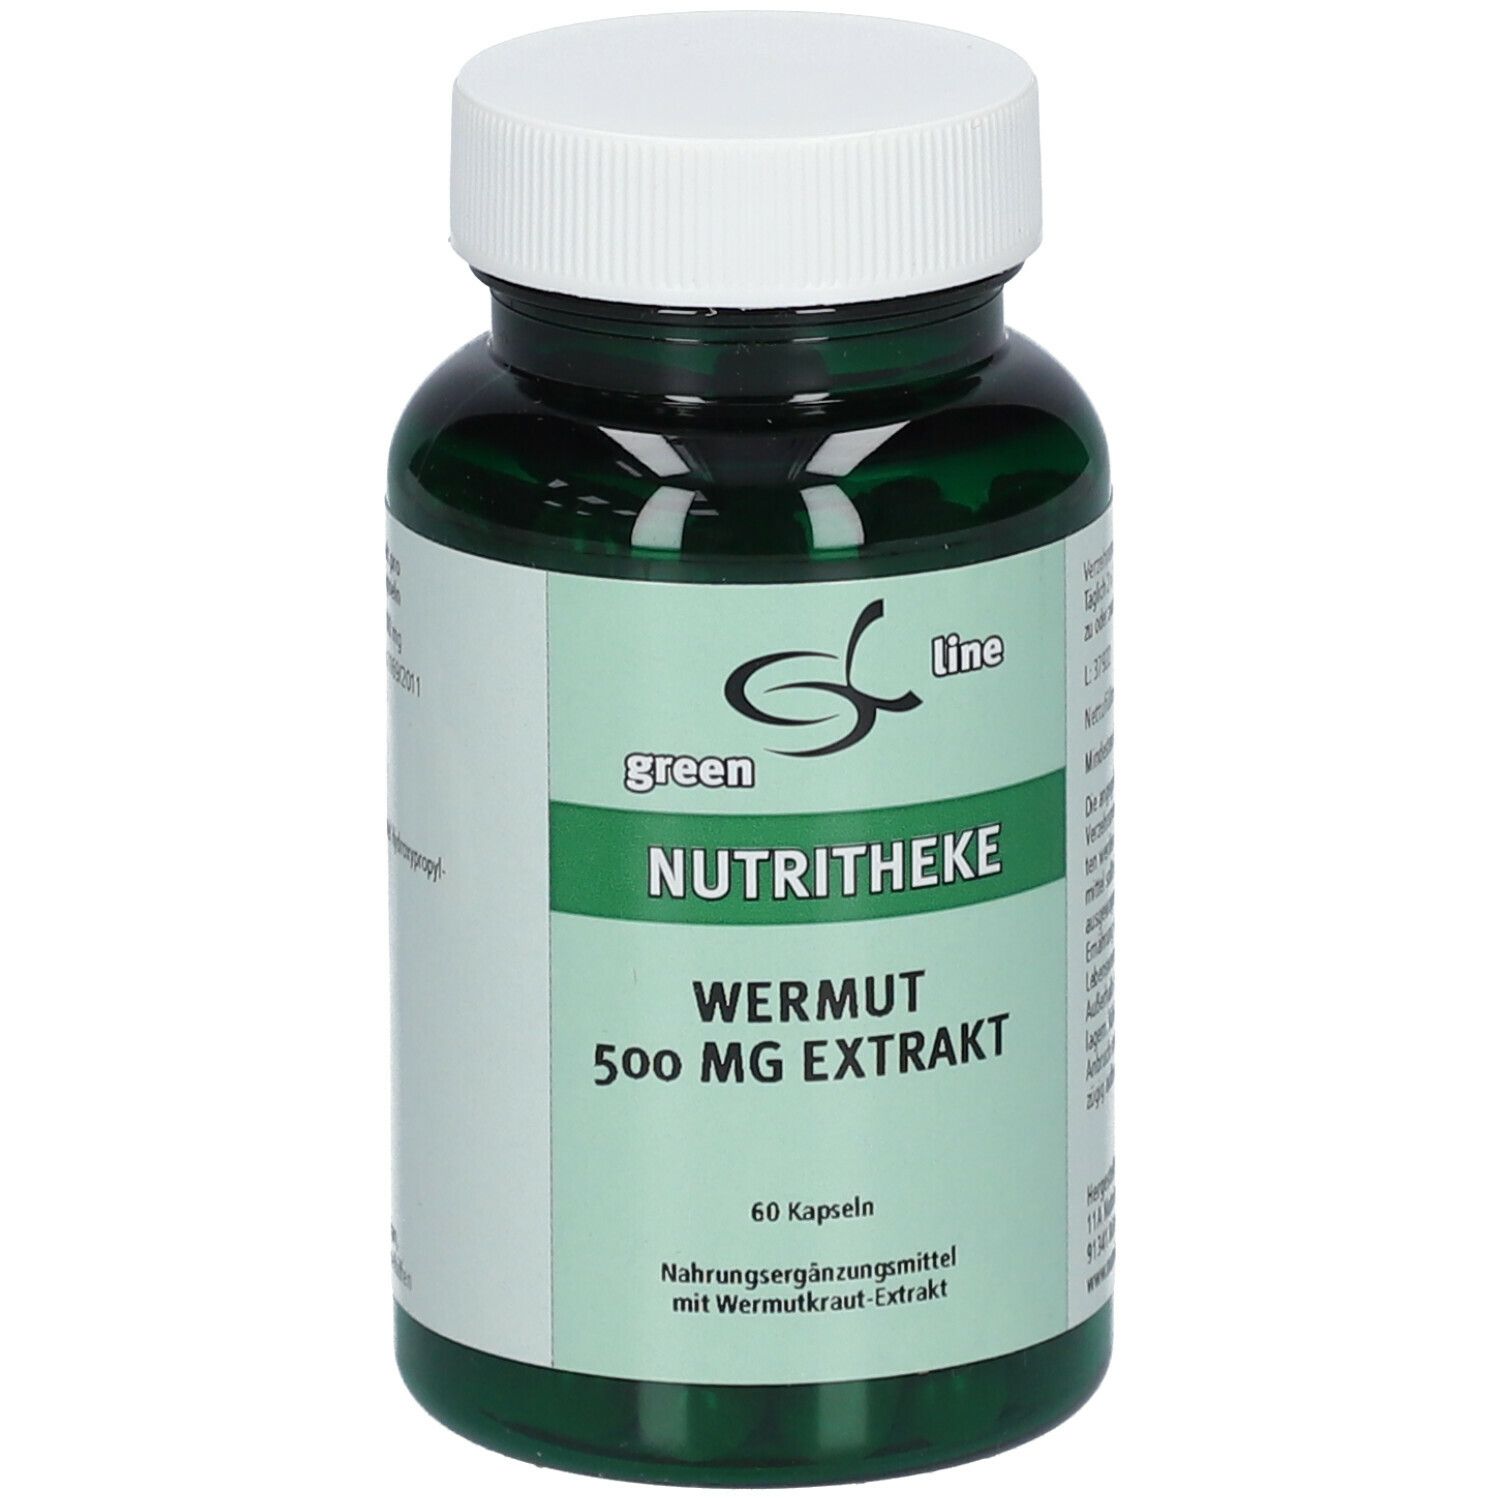 green line WERMUT 500 mg Extrakt 60 St 